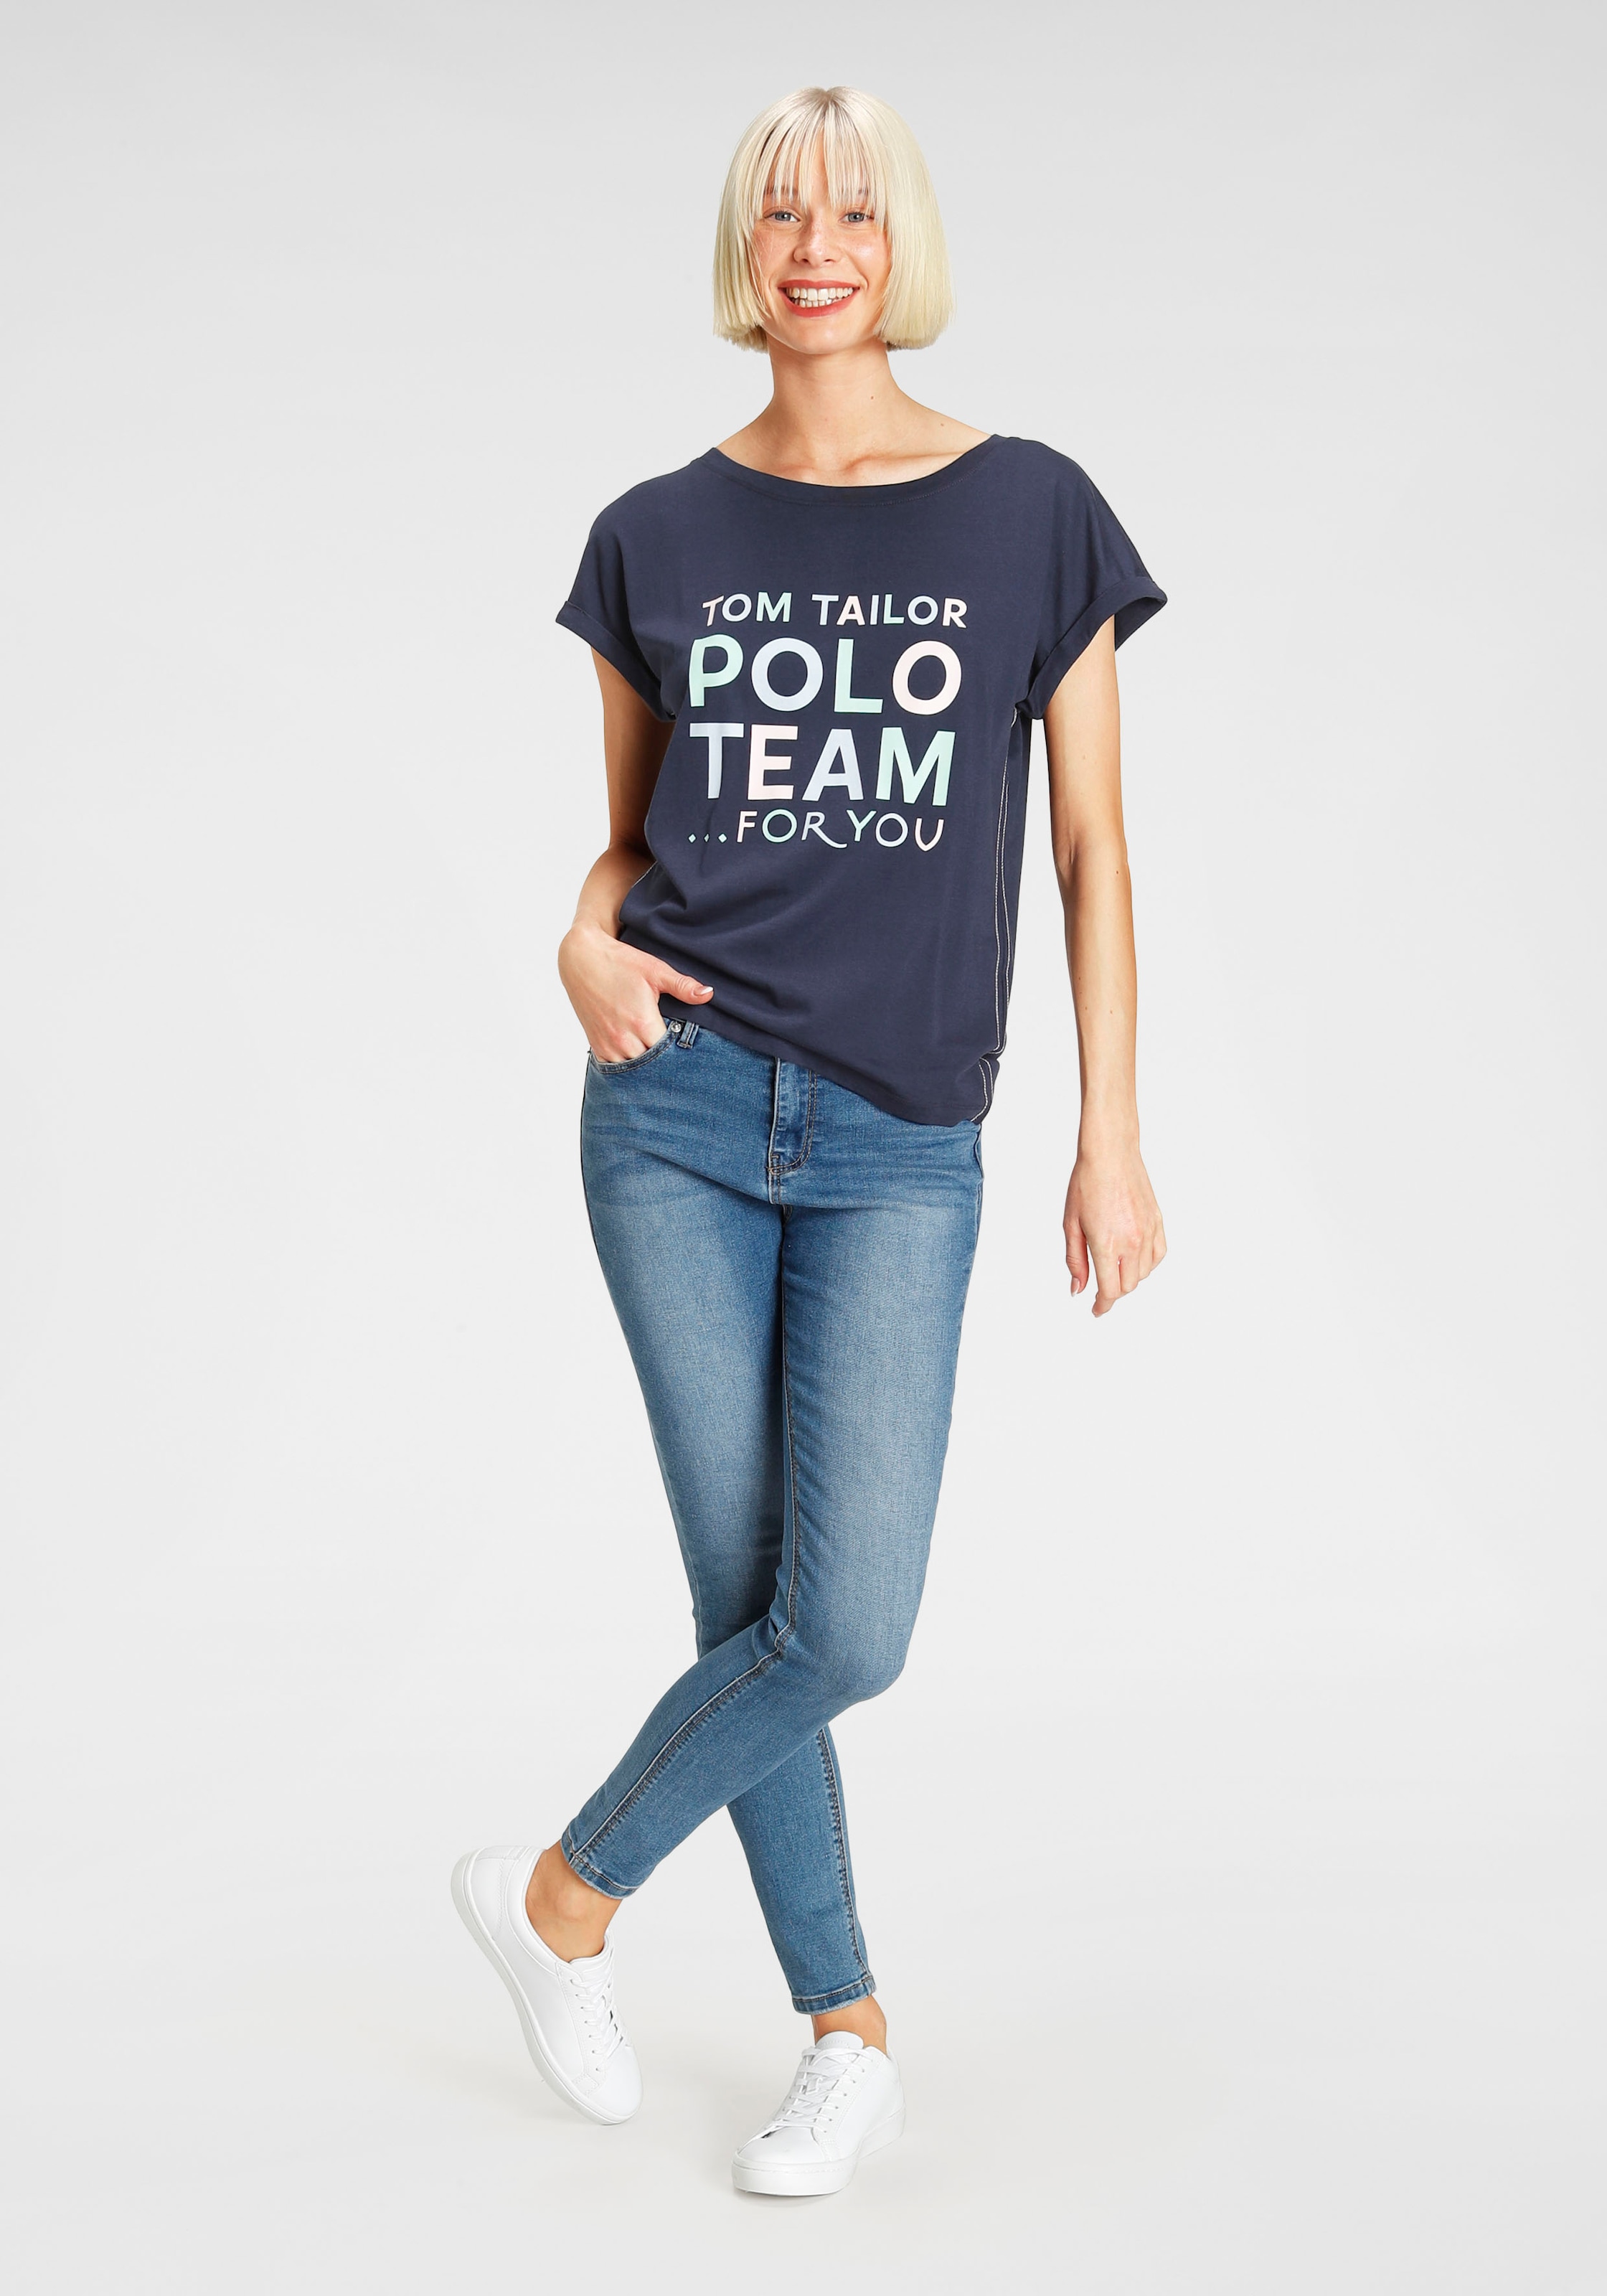 TAILOR Polo Print-Shirt, Logo-Print bestellen | TOM BAUR Team großem farbenfrohen